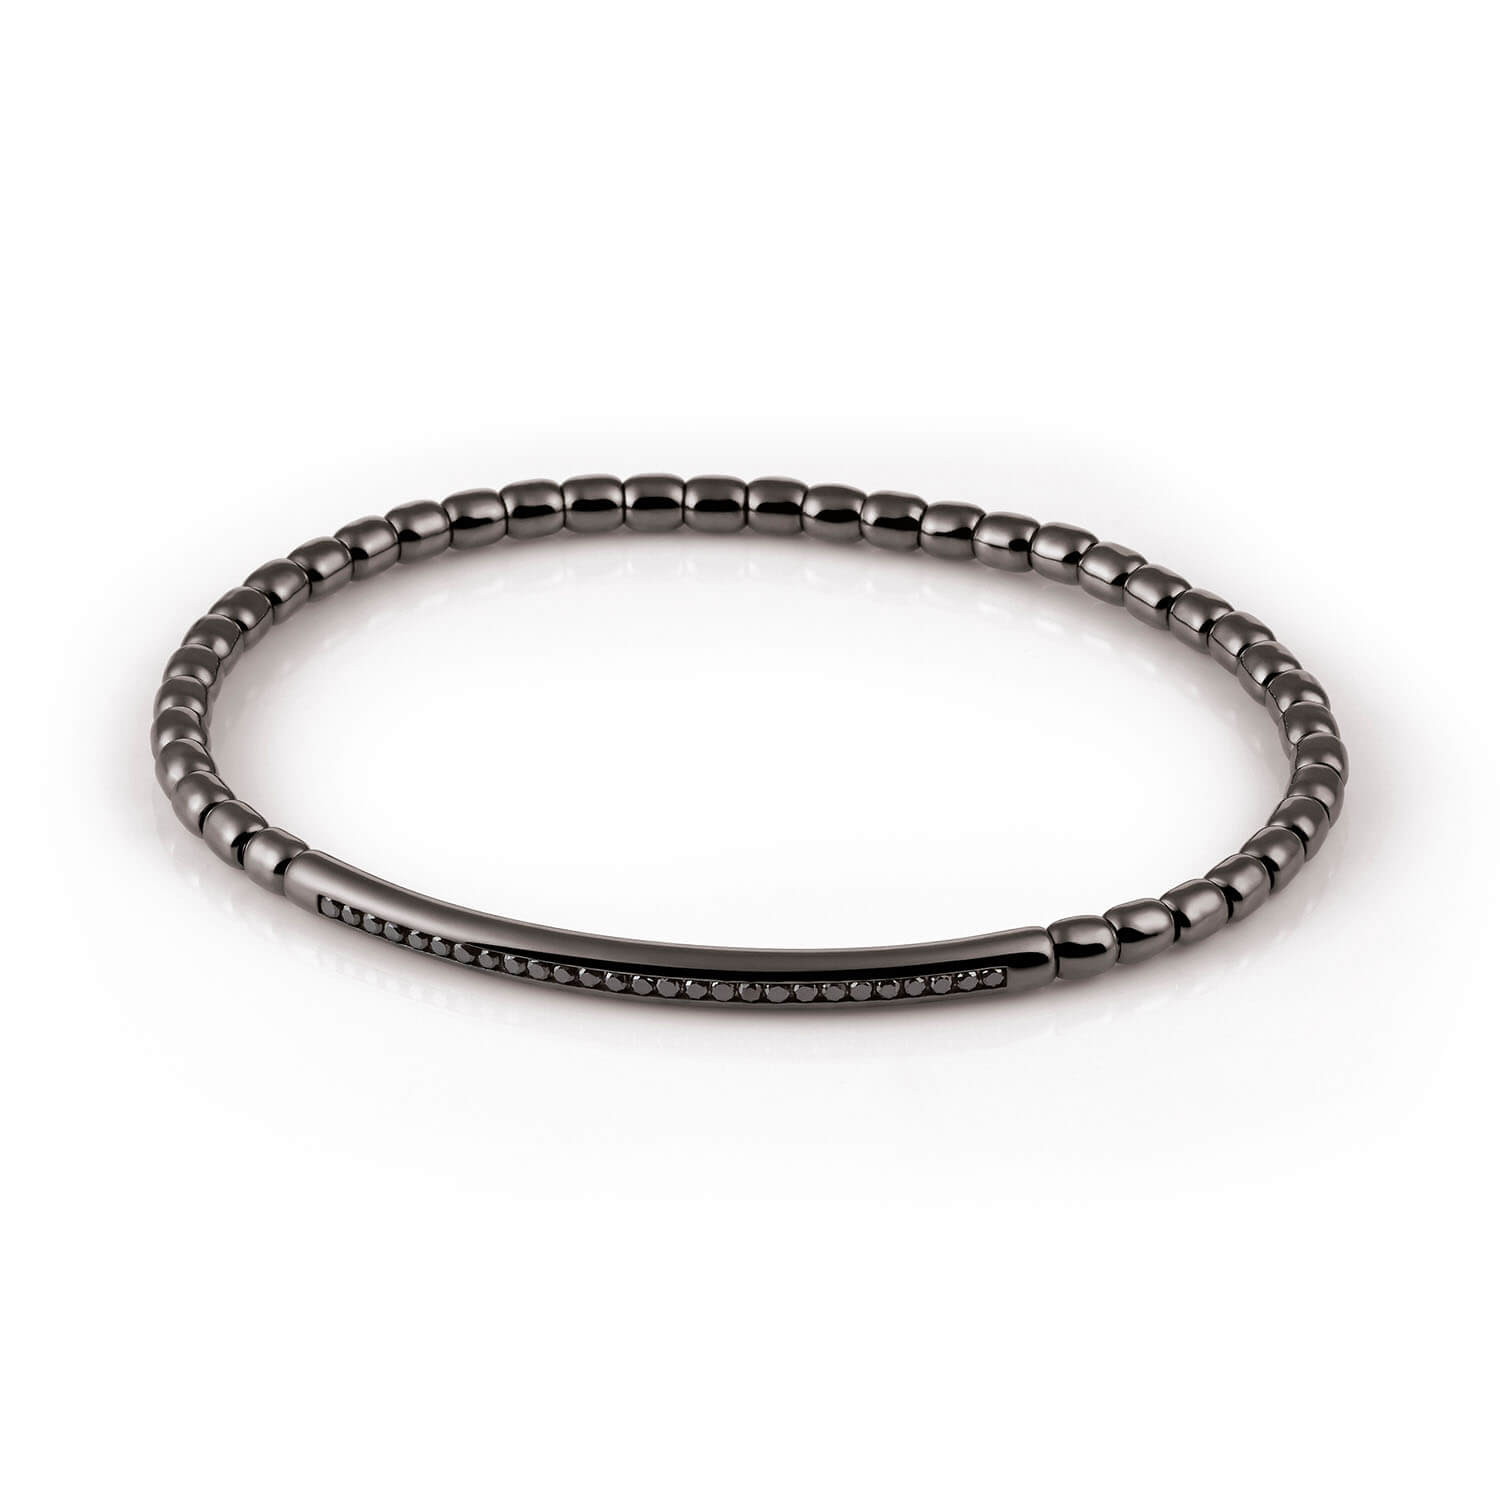 Al Coro Stretchy Men's Bracelet in Black Ruthenium with Black Diamonds - Orsini Jewellers NZ